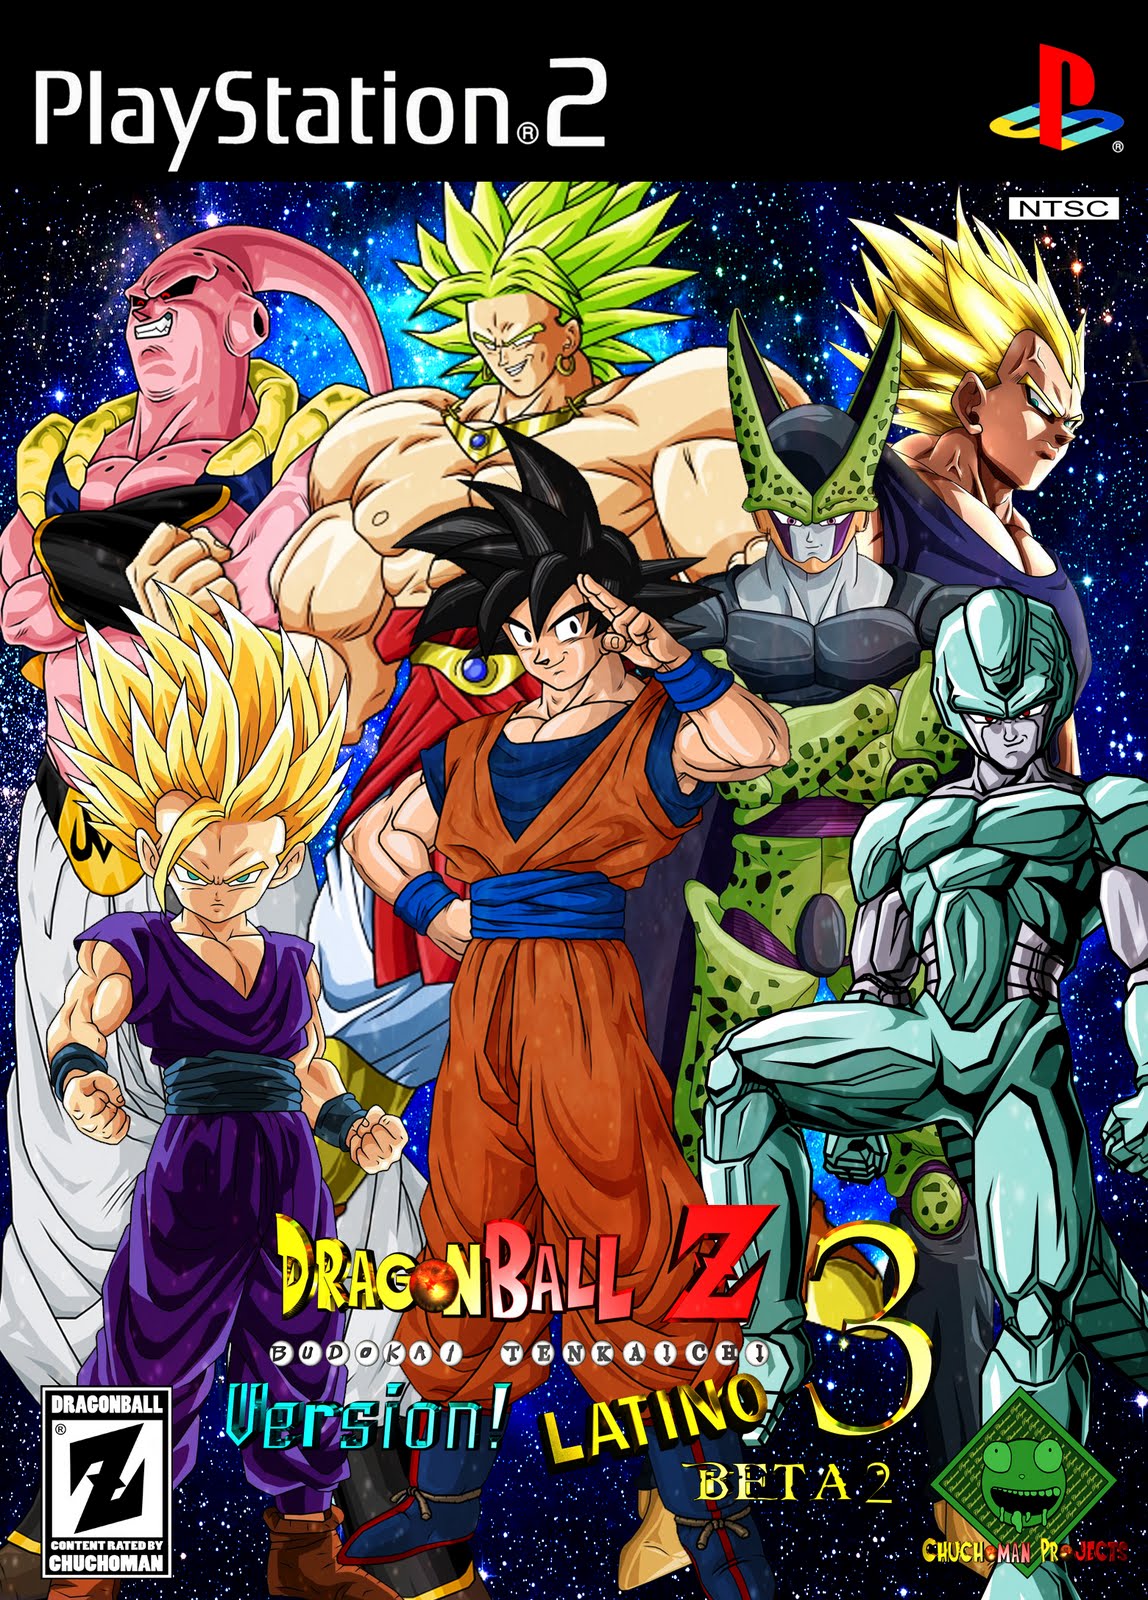 DBZ BT3 Goku fnf tecnicas cargables mod #3 YouTube - Dbz Bt3 Goku Fnf Ssj1 Ssj2 Ssj3 E